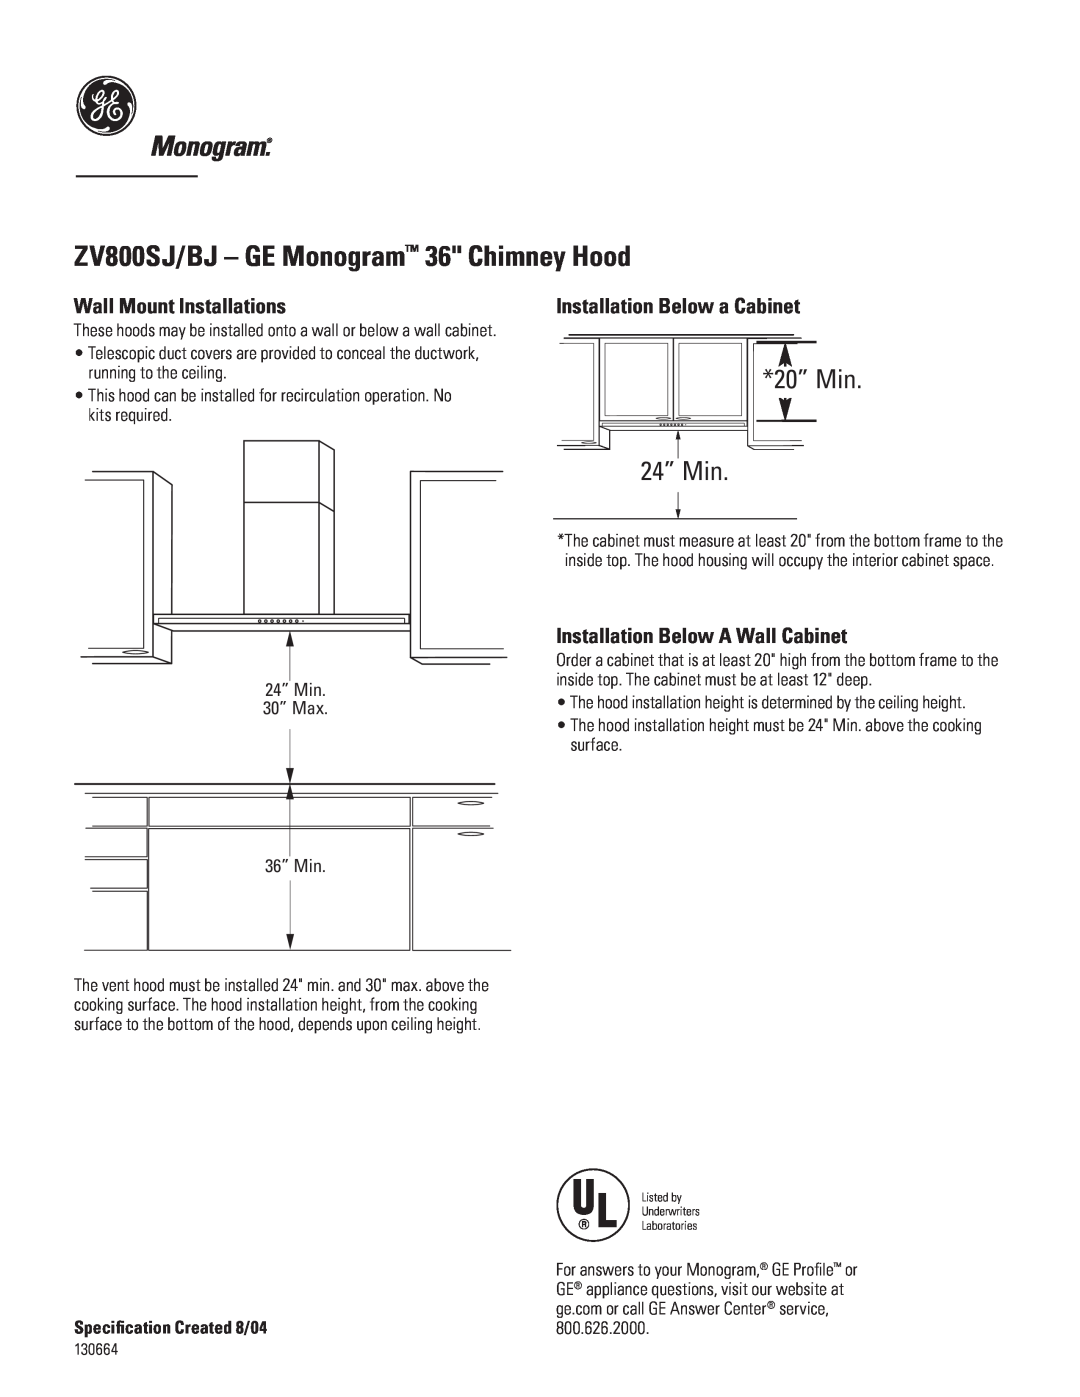 GE Monogram ZV800SJ/BJ - GE Monogram 36 Chimney Hood, 20” Min 24” Min, Wall Mount Installations, 24” Min 30” Max 